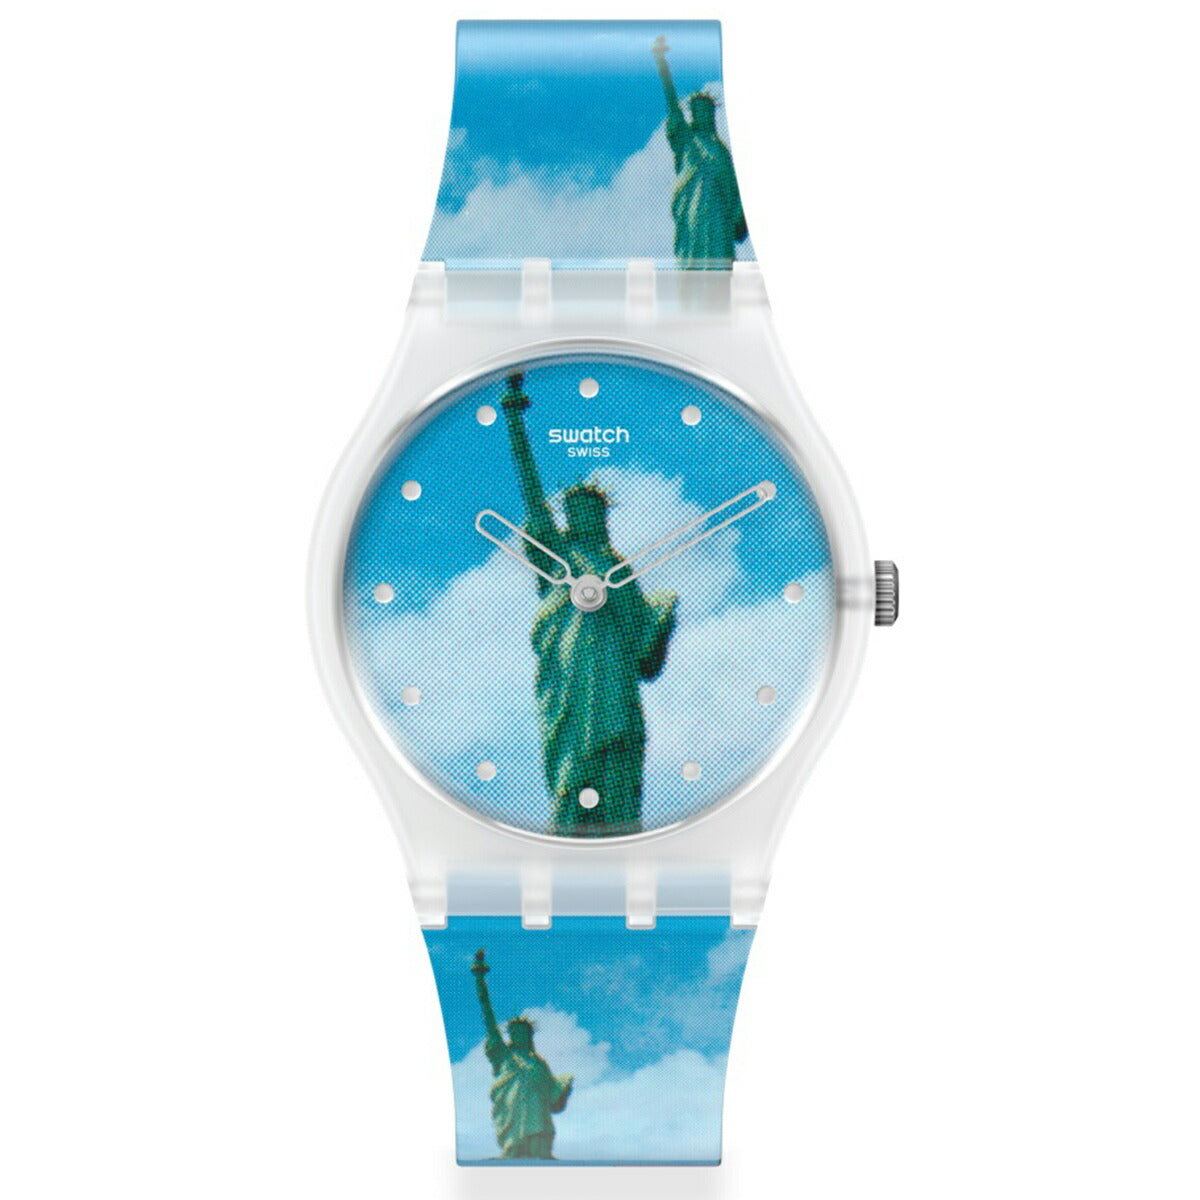 swatch スウォッチ MoMA 腕時計 メンズ レディース ジェント ニューヨーク・バイ・タダノリ・ヨコオ ザ・ウォッチ Gent NEW YORK BY TADANORI YOKOO、THE WATCH GZ351